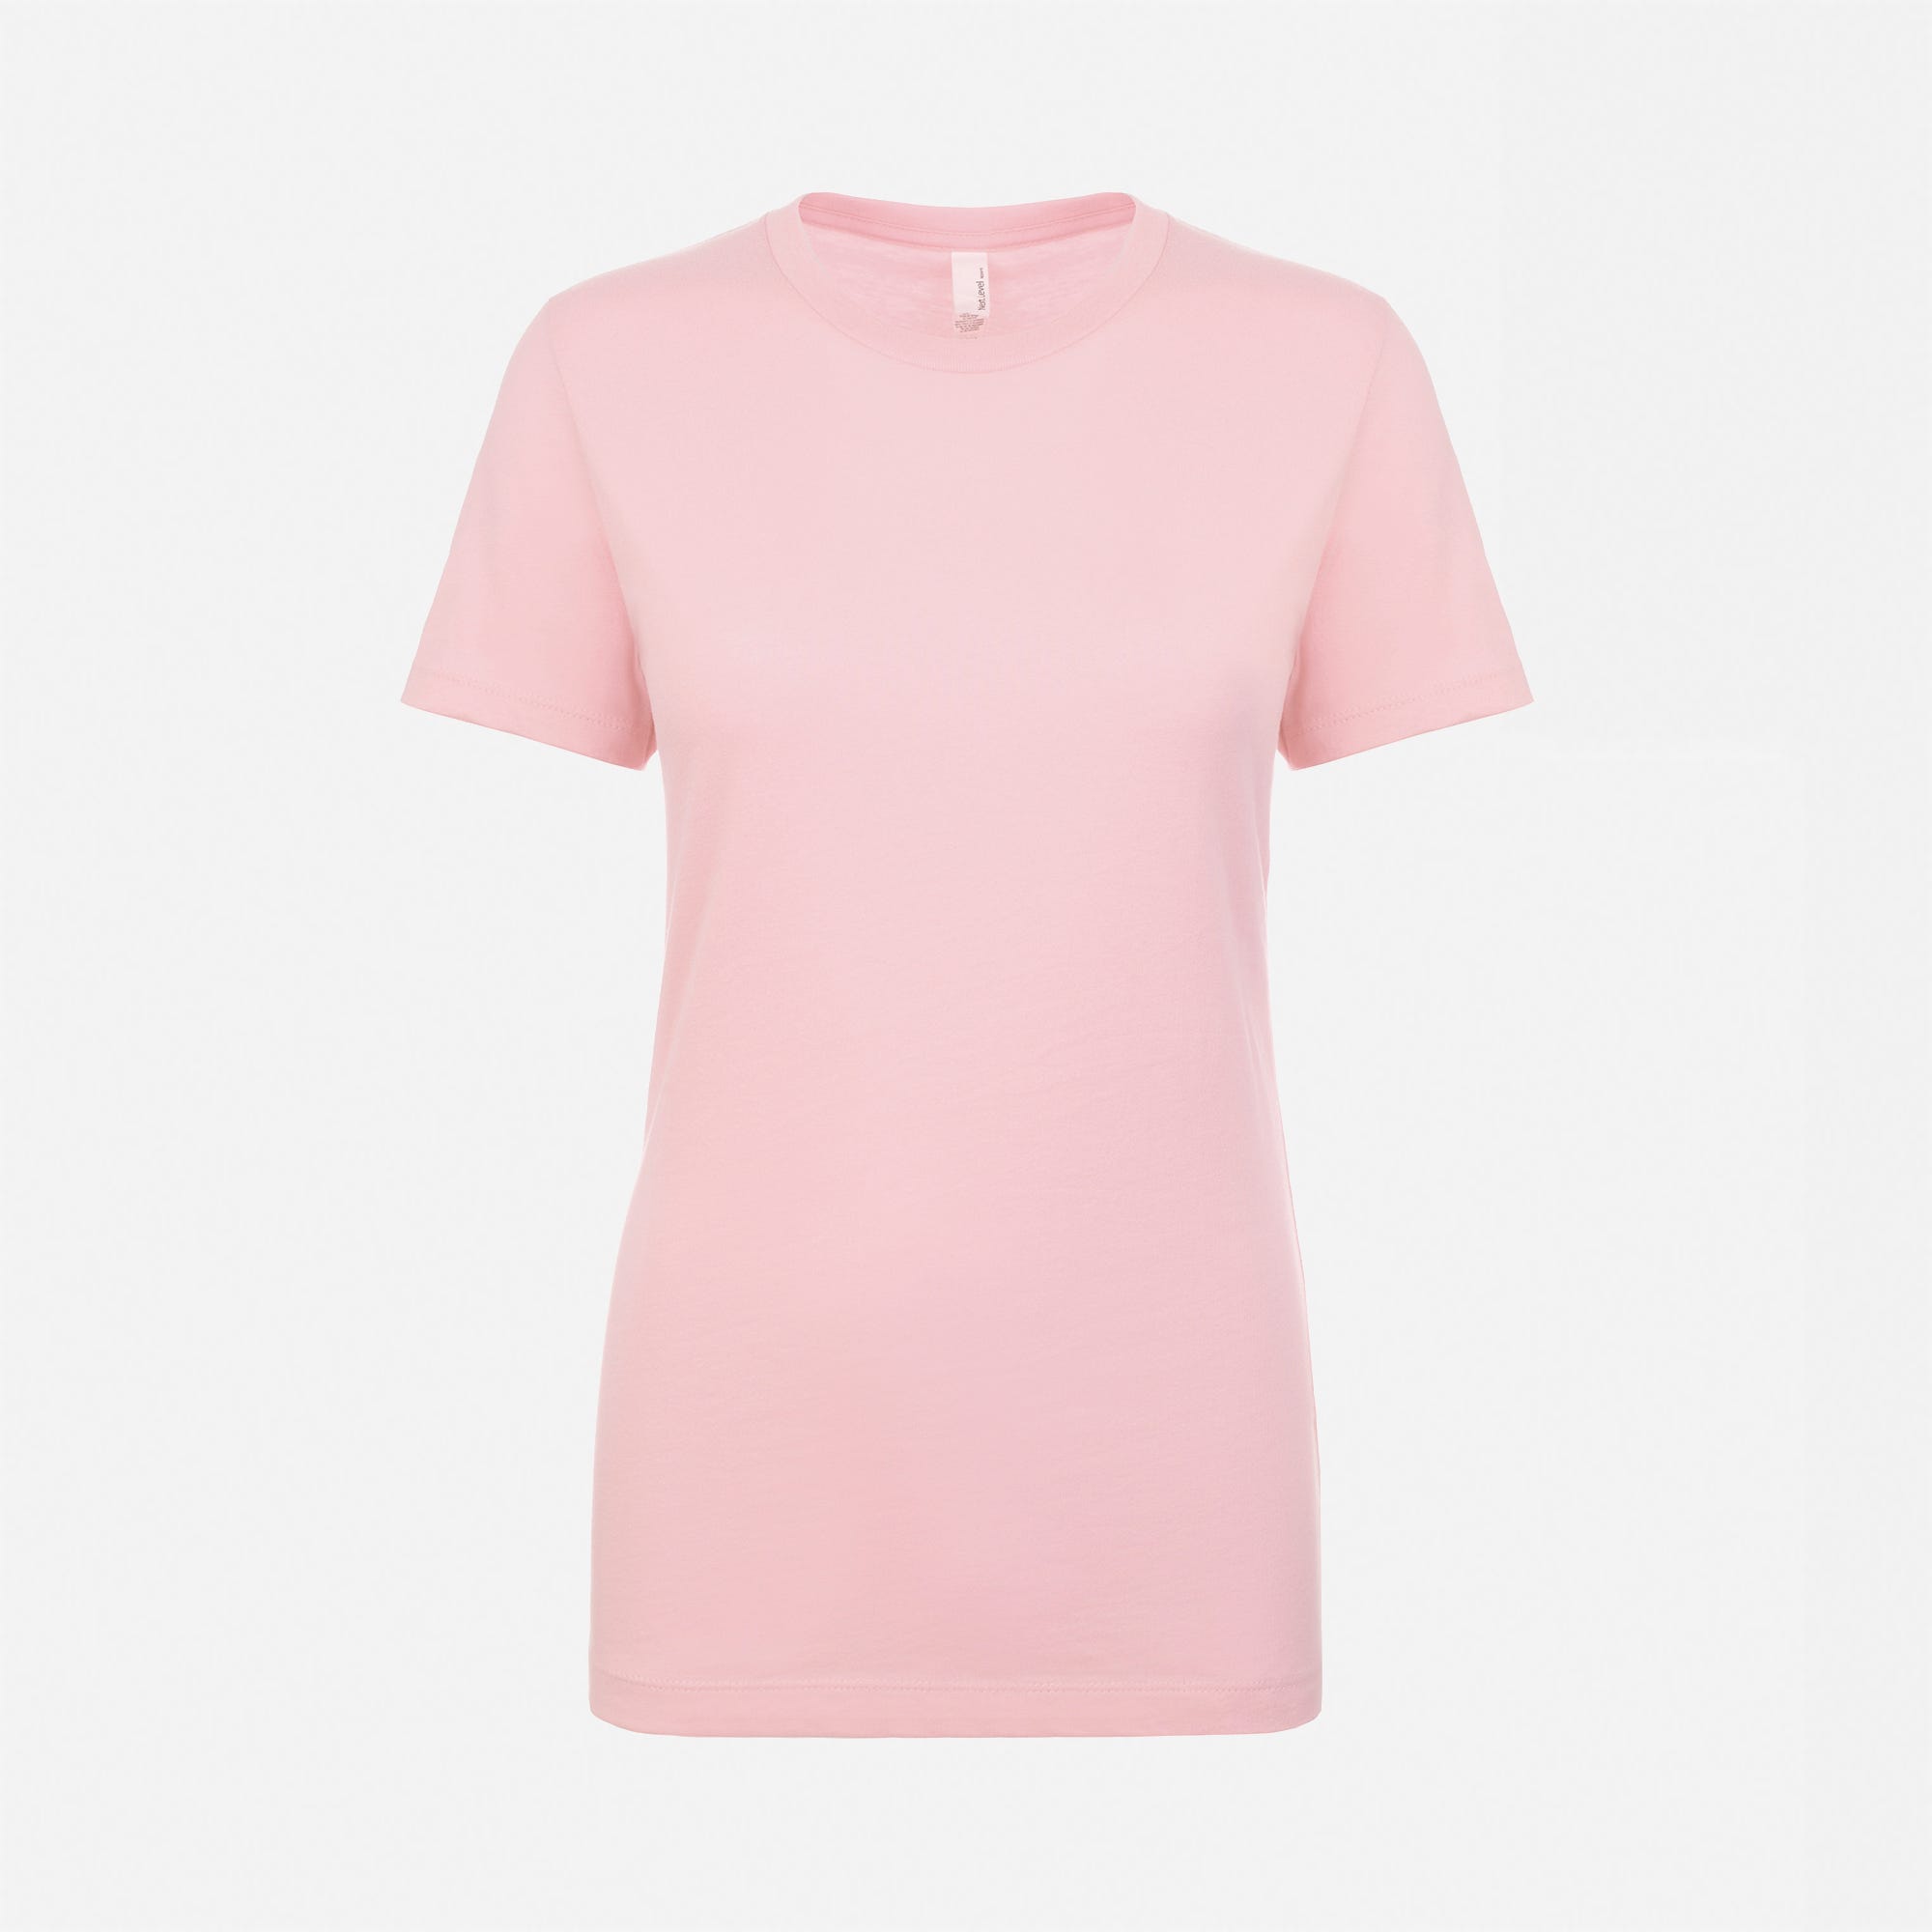 Cotton Boyfriend T-Shirt Light Pink 3900 Next Level Apparel Sample Womens Front View